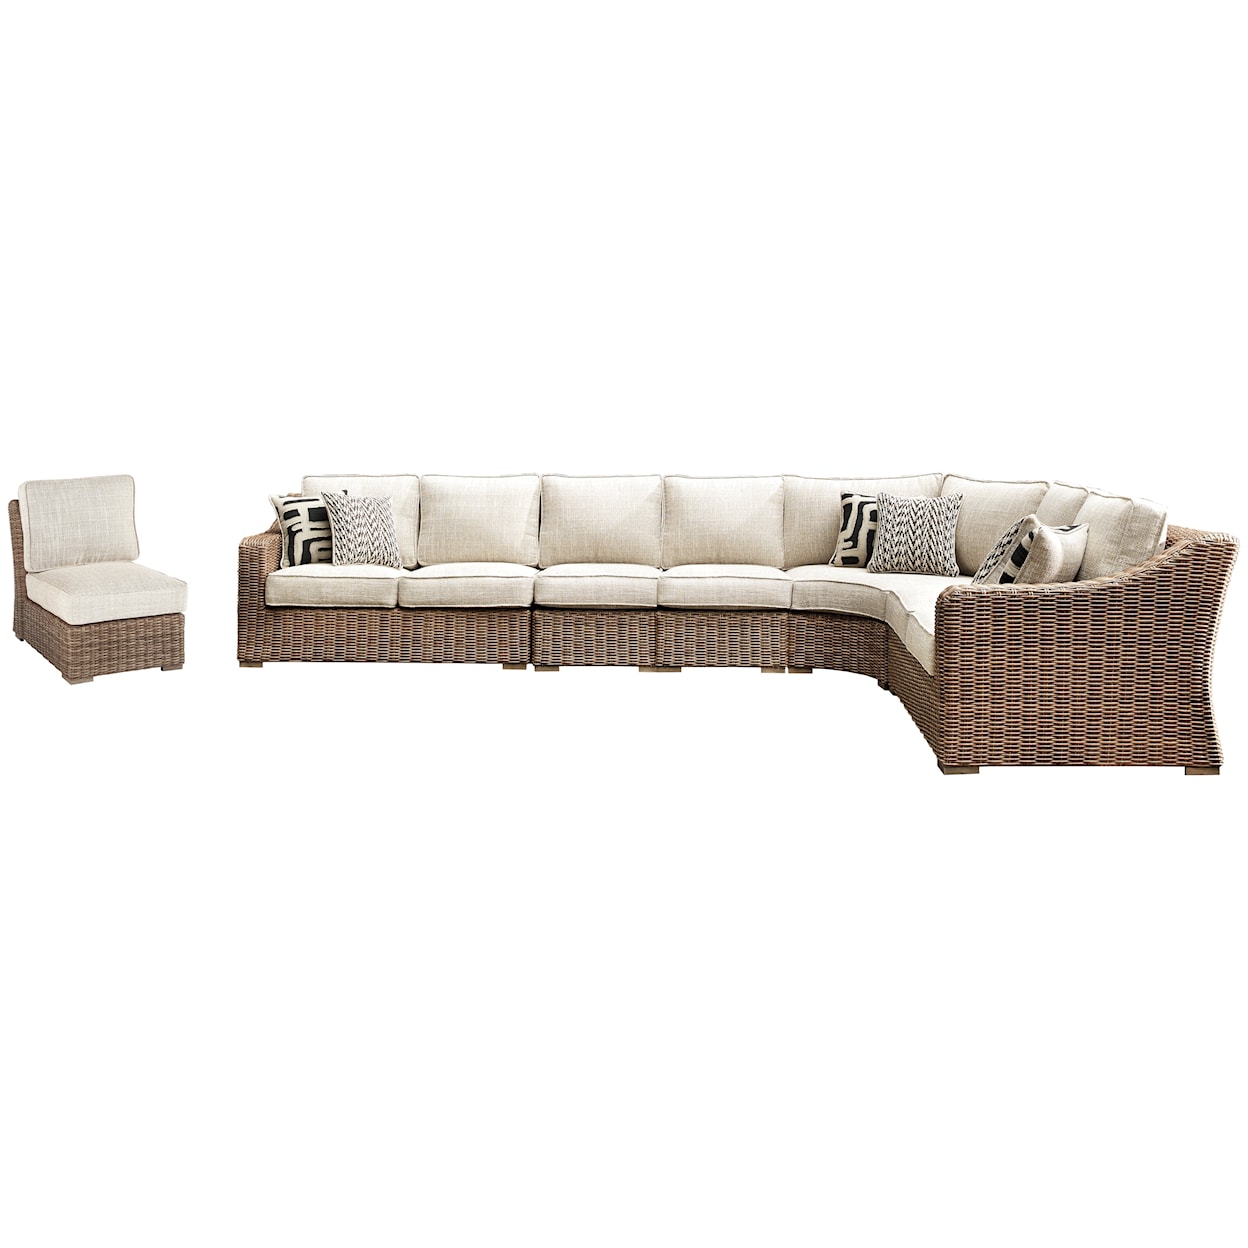 Ashley Furniture Signature Design Beachcroft 6-Piece Outdoor Seating Set